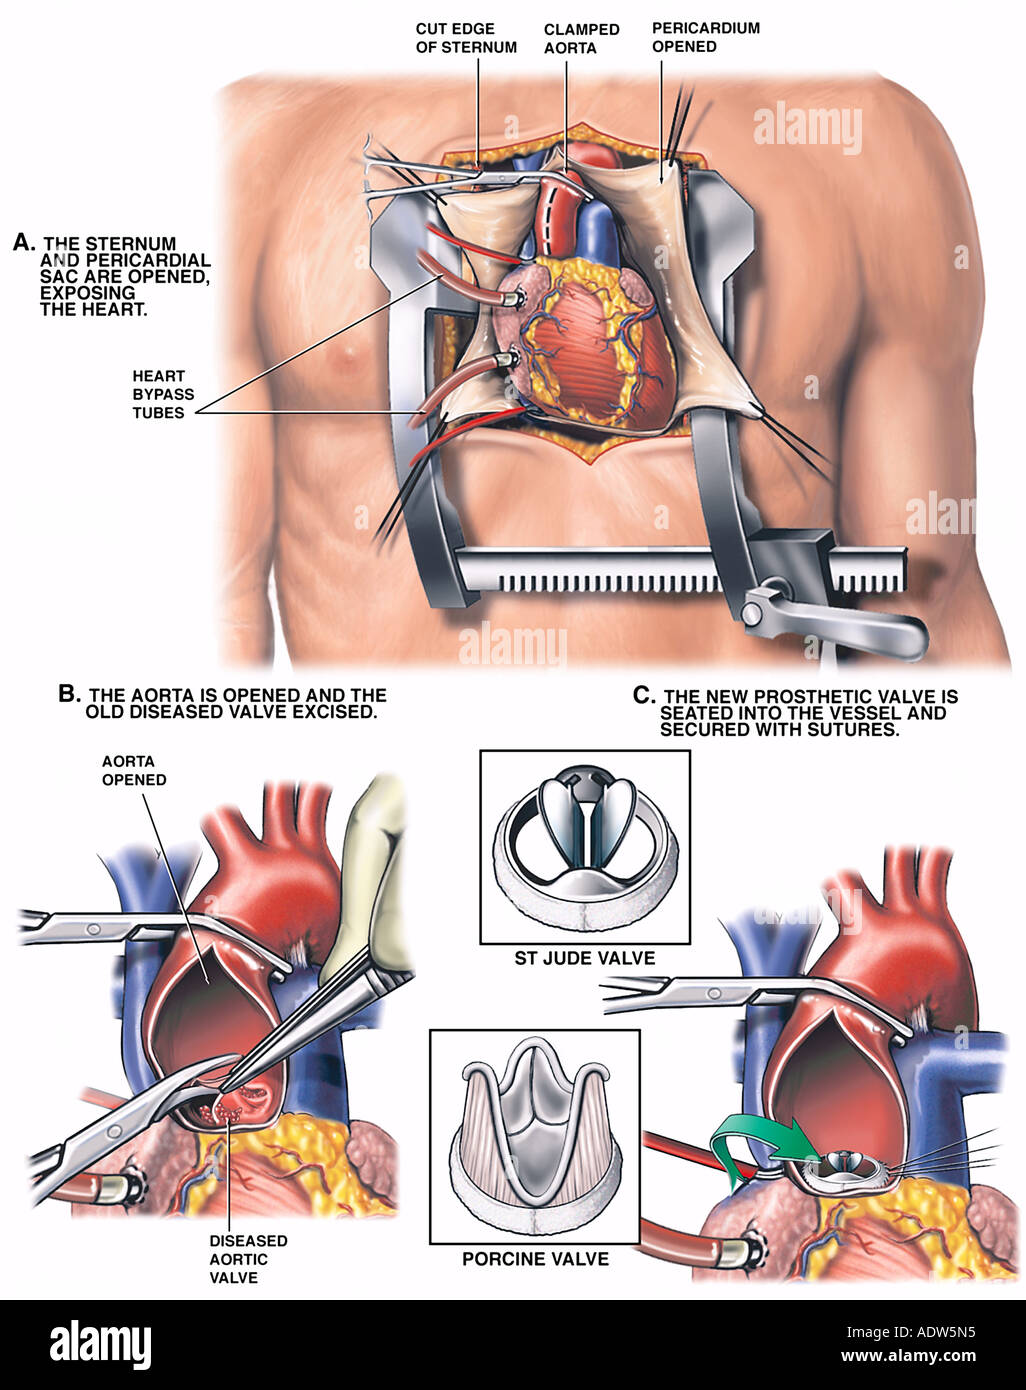 Santana Heart Surgery